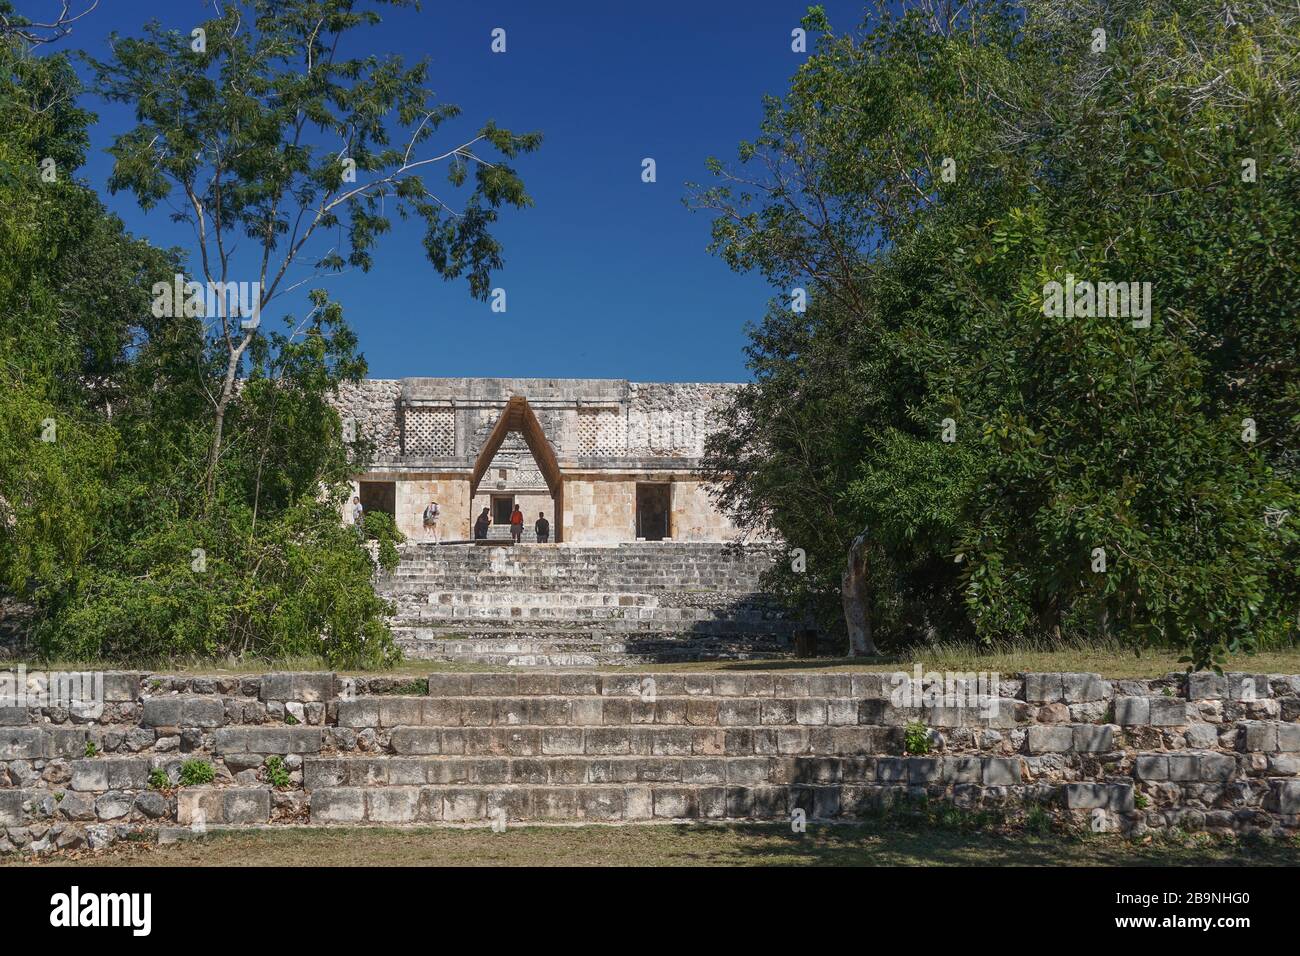 Uxmal, Mexico: The Quadrangle of the Birds at the ancient Mayan ruins of Uxmal. Stock Photo